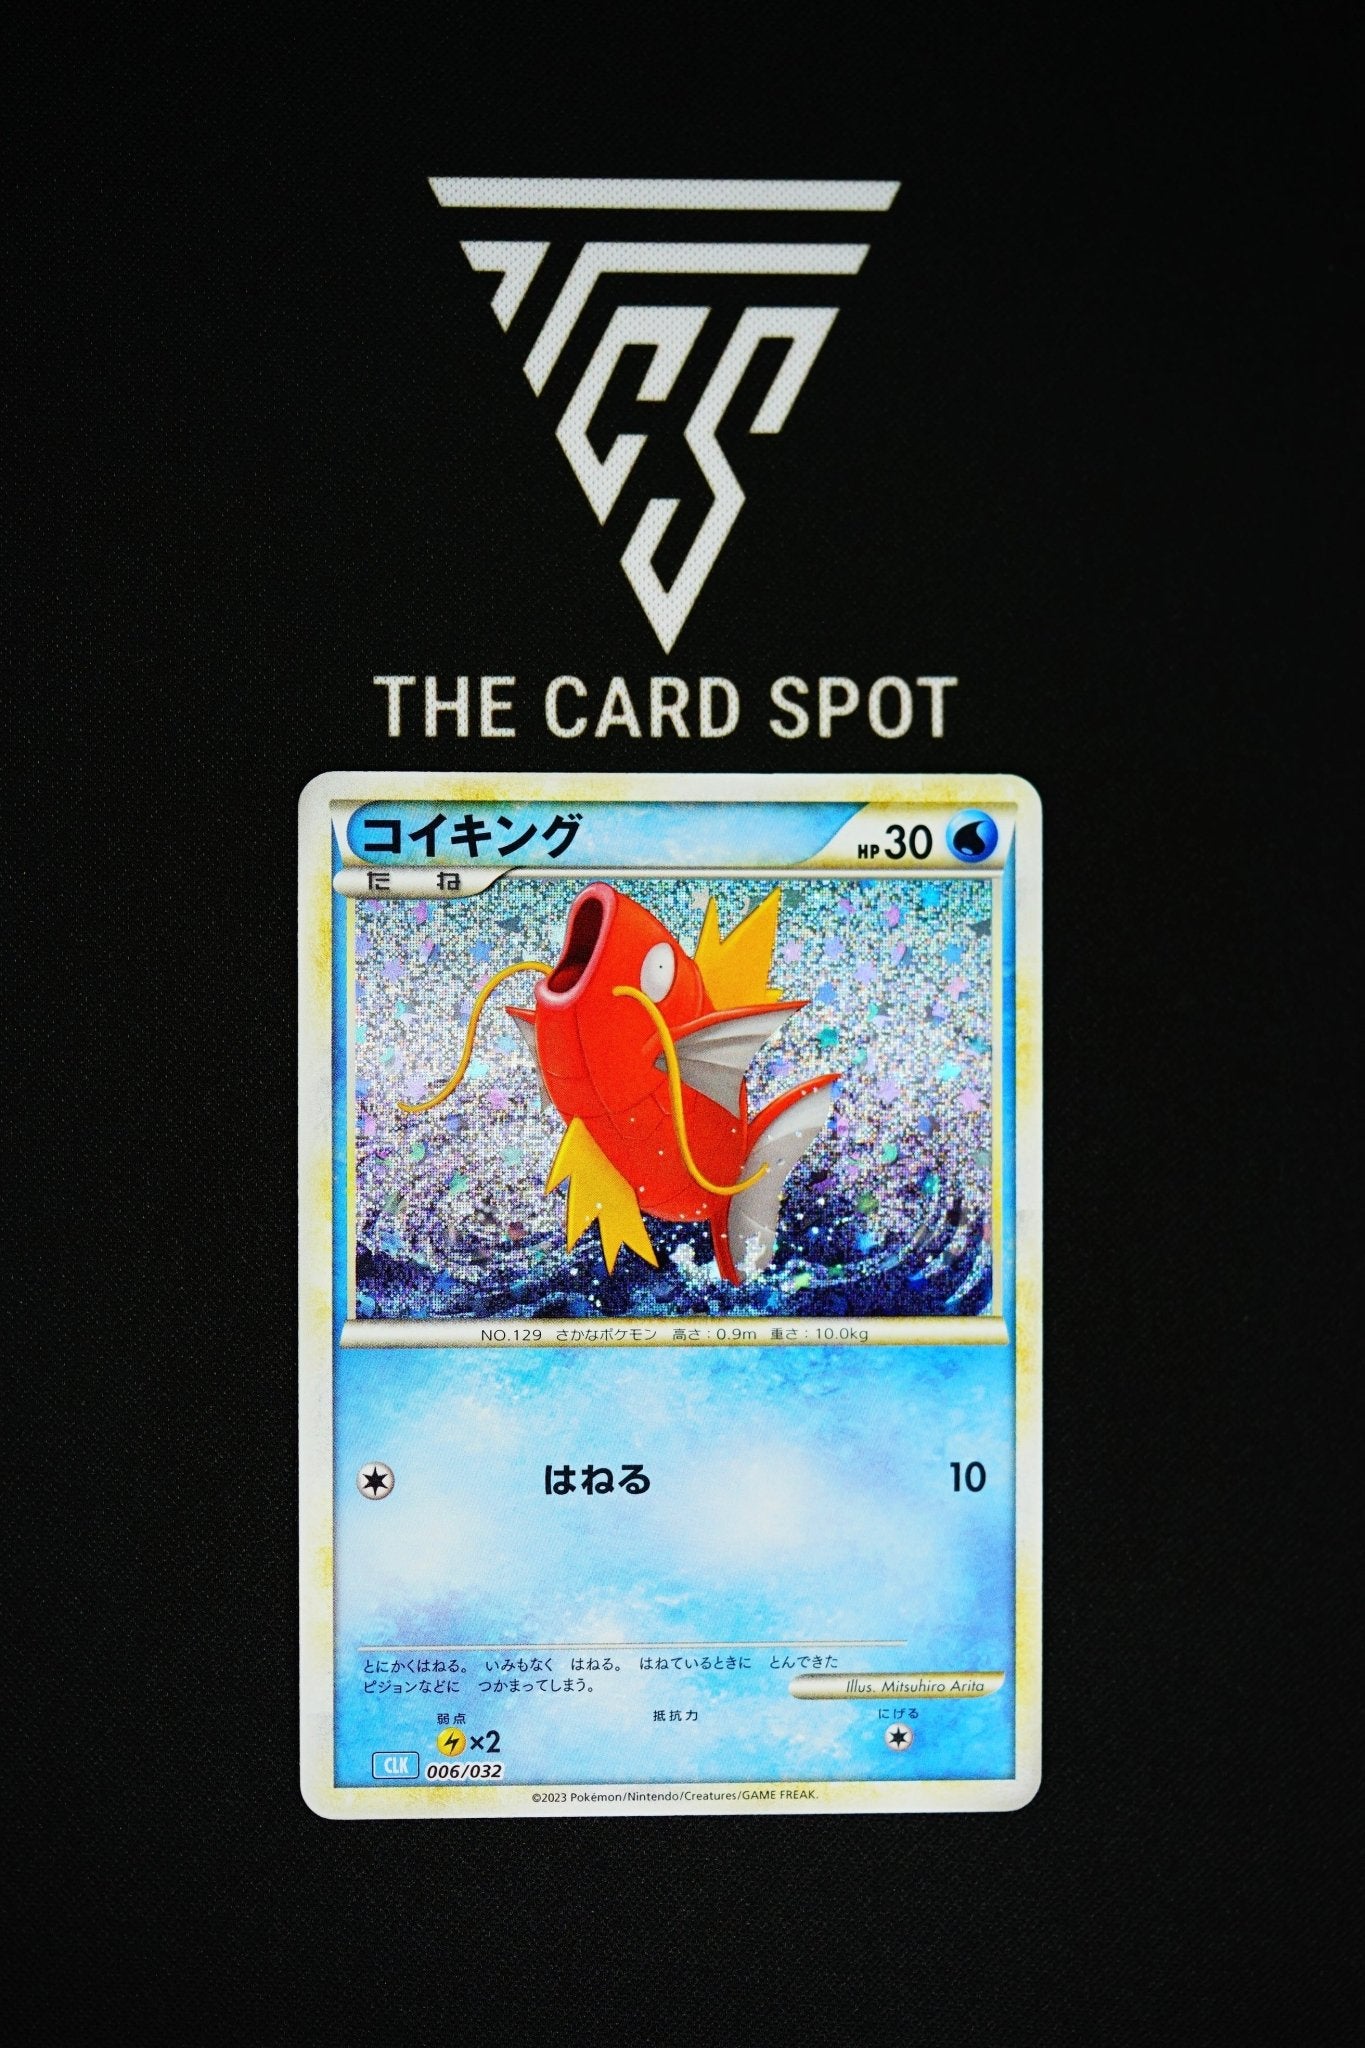 006/32 Magikarp Classic Collection - Pokemon - THE CARD SPOT PTY LTD.Pokemon Raw CardsPokémon